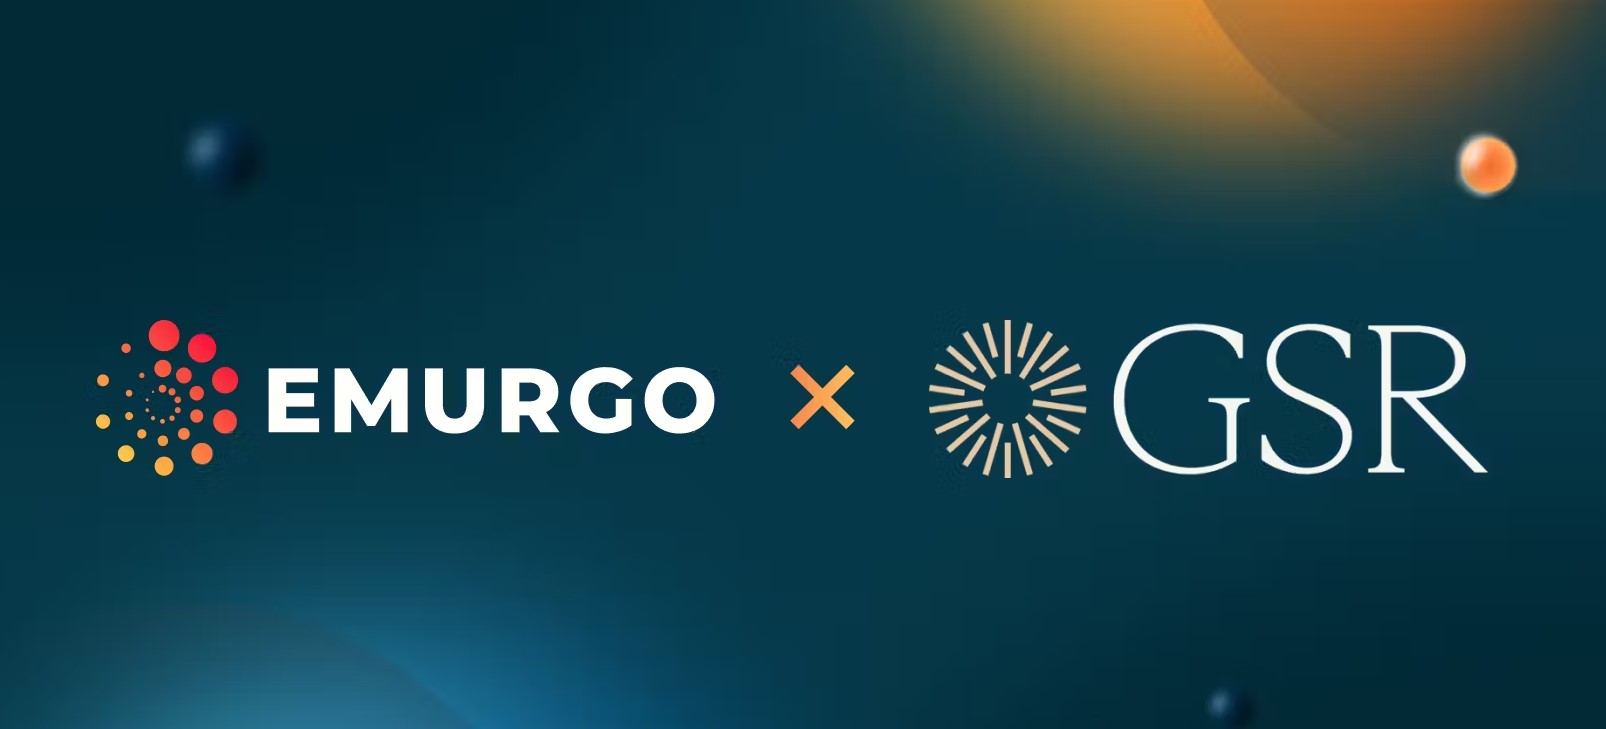 The Partnership between EMURGO and GSR will Empower Cardano